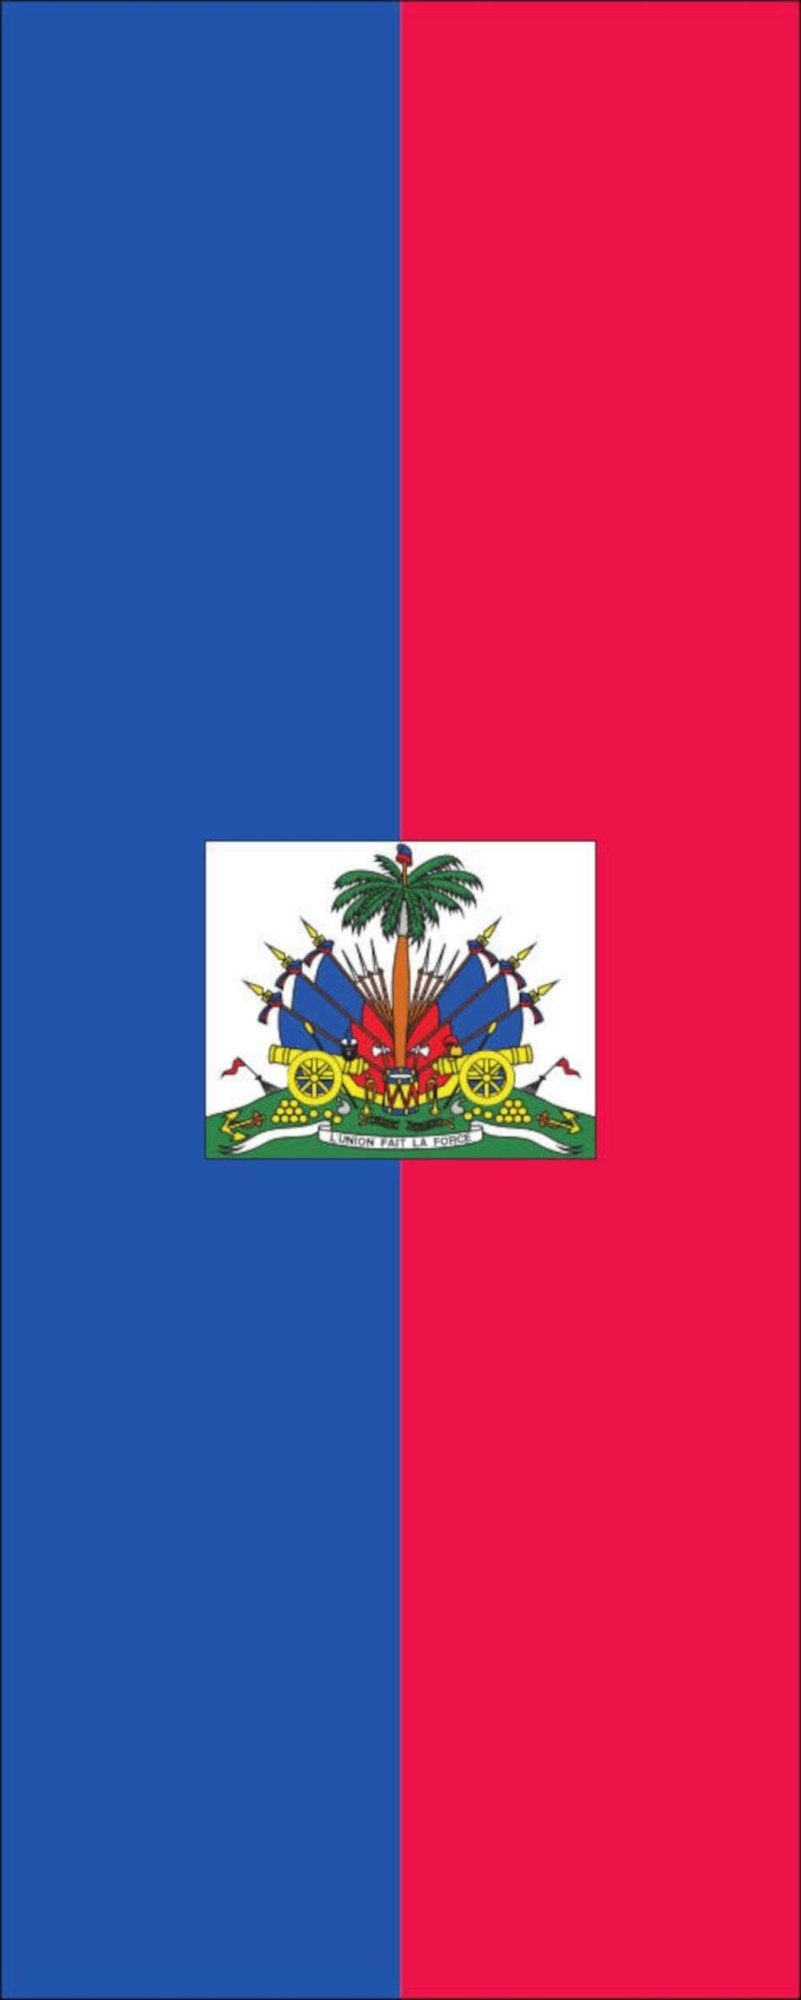 flaggenmeer Flagge Flagge Haiti mit Wappen 110 g/m² Hochformat